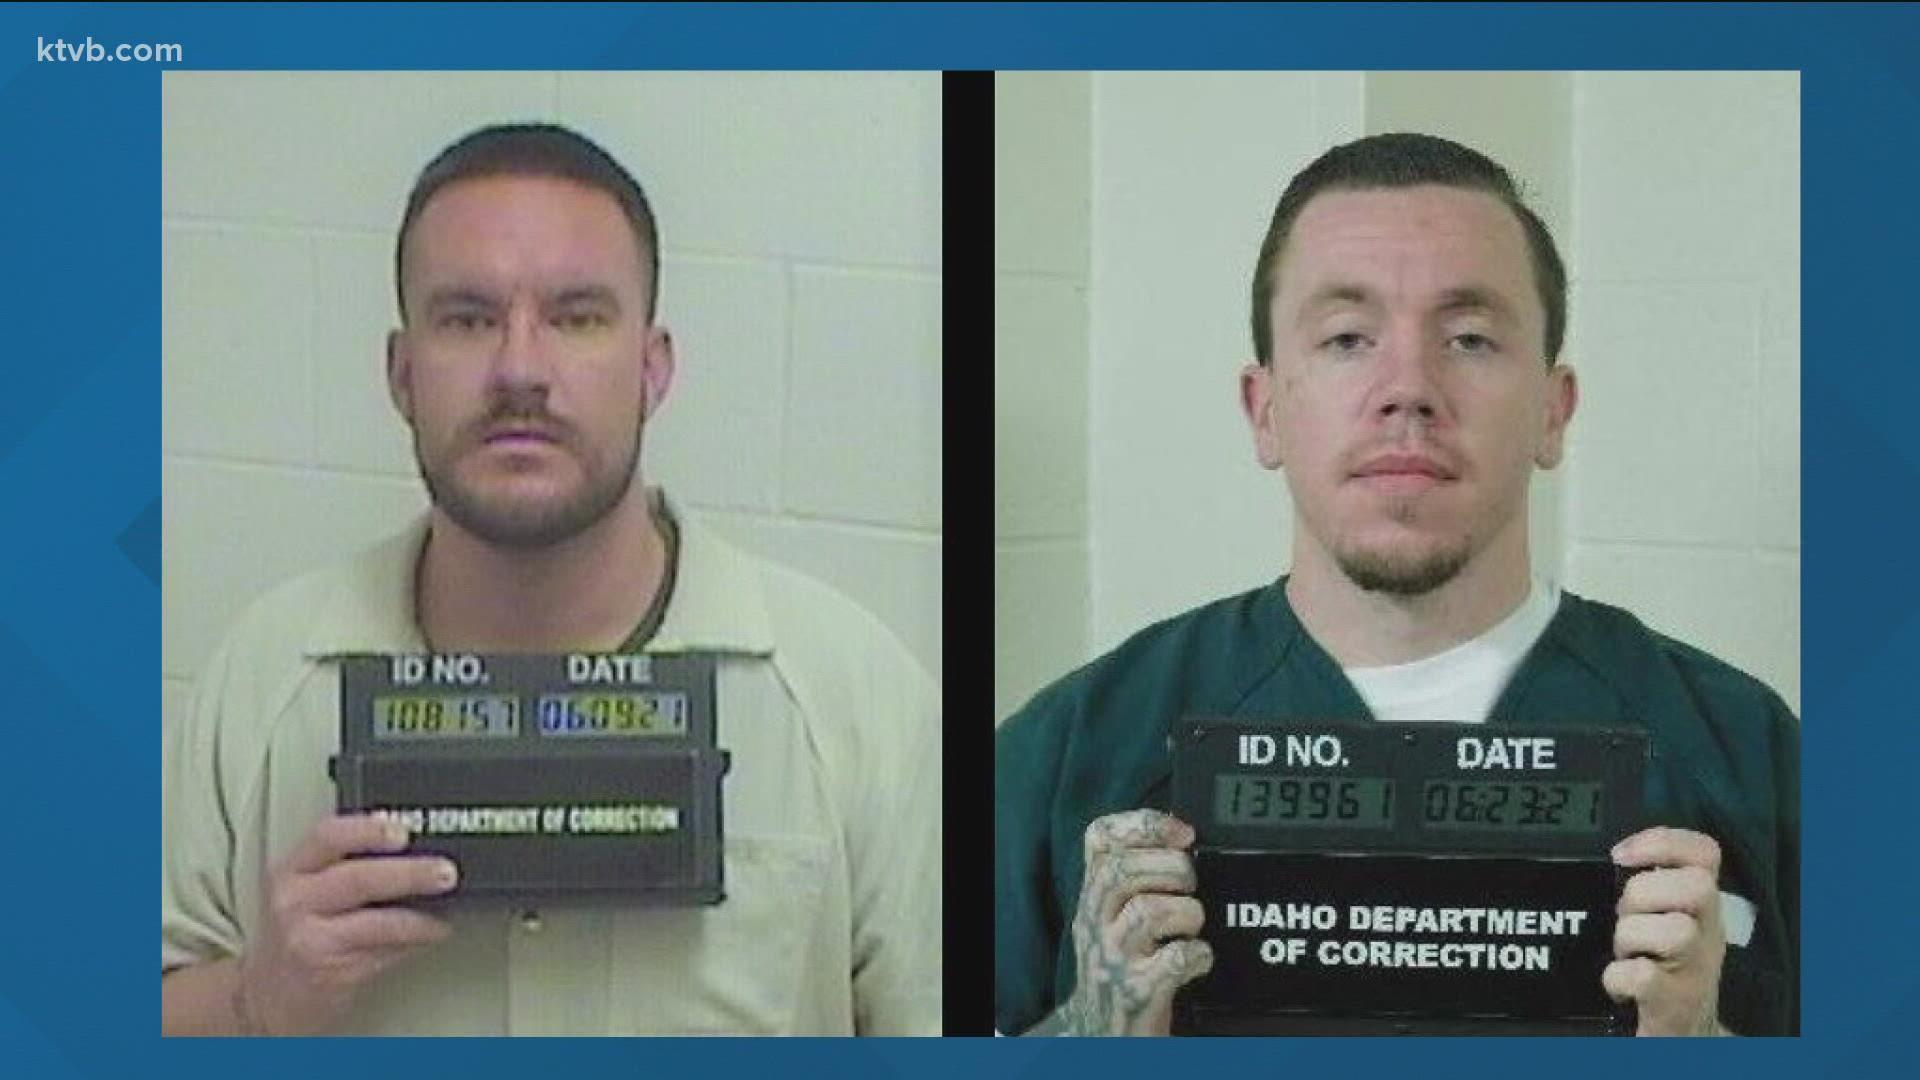 Jeffrey Mangum and William McCarty are inmates in the South Idaho Correctional Institution's Minimum Custody Unit.